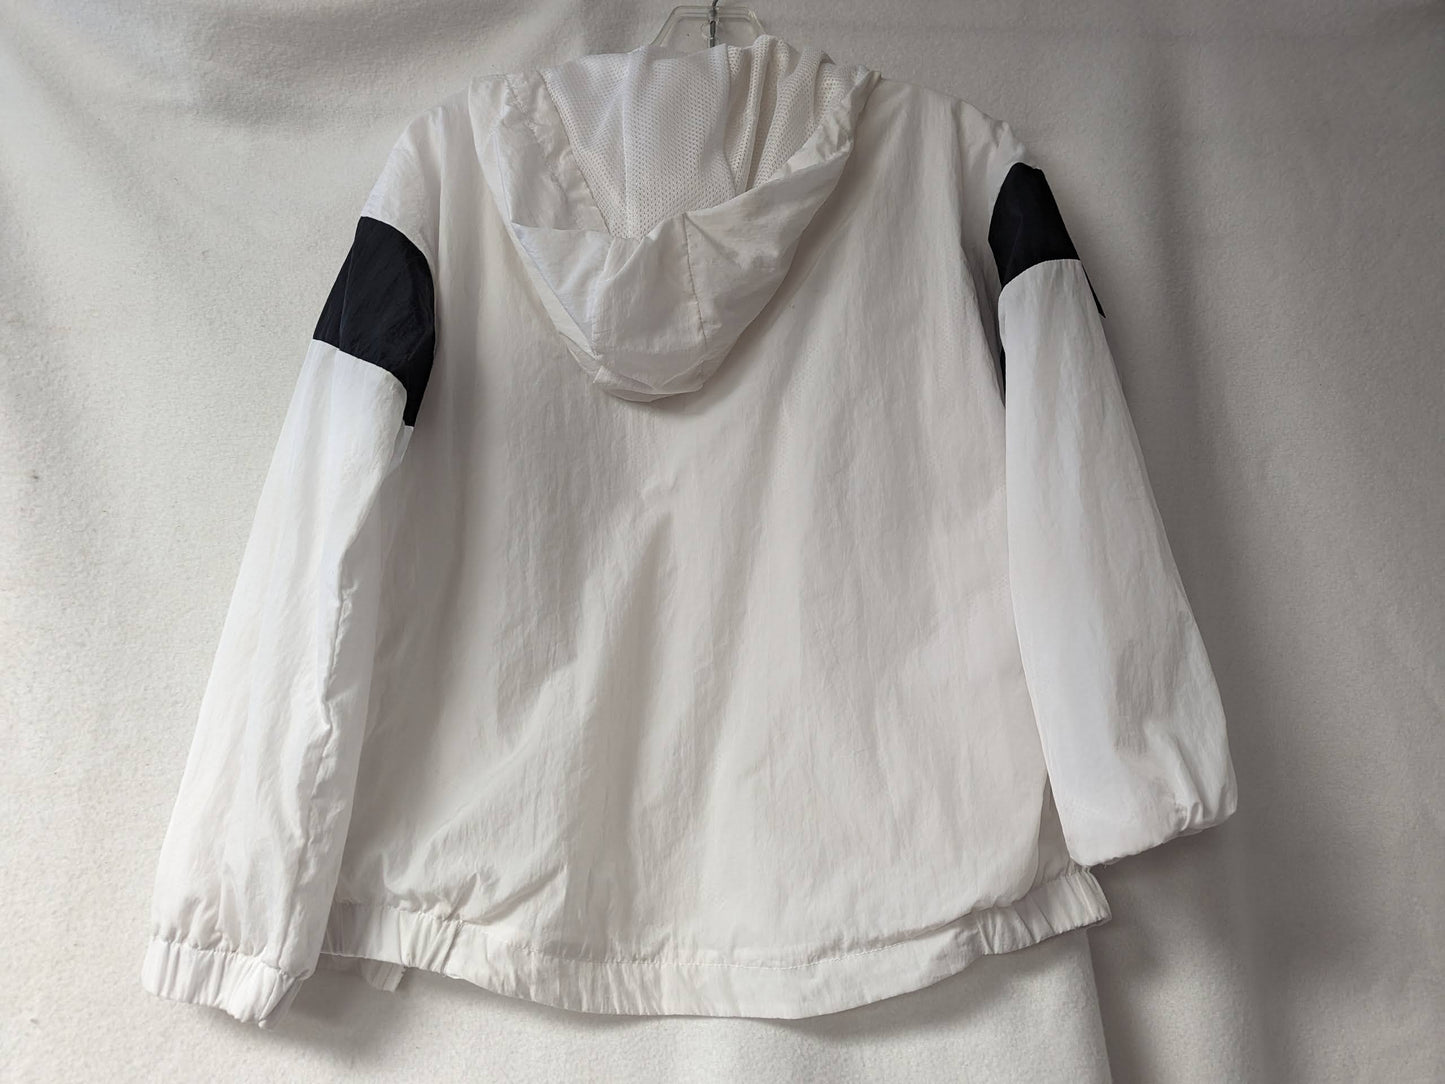 Adidas Hooded Youth Warm up Jacket Coat Size Youth Medium Color White Condition Used